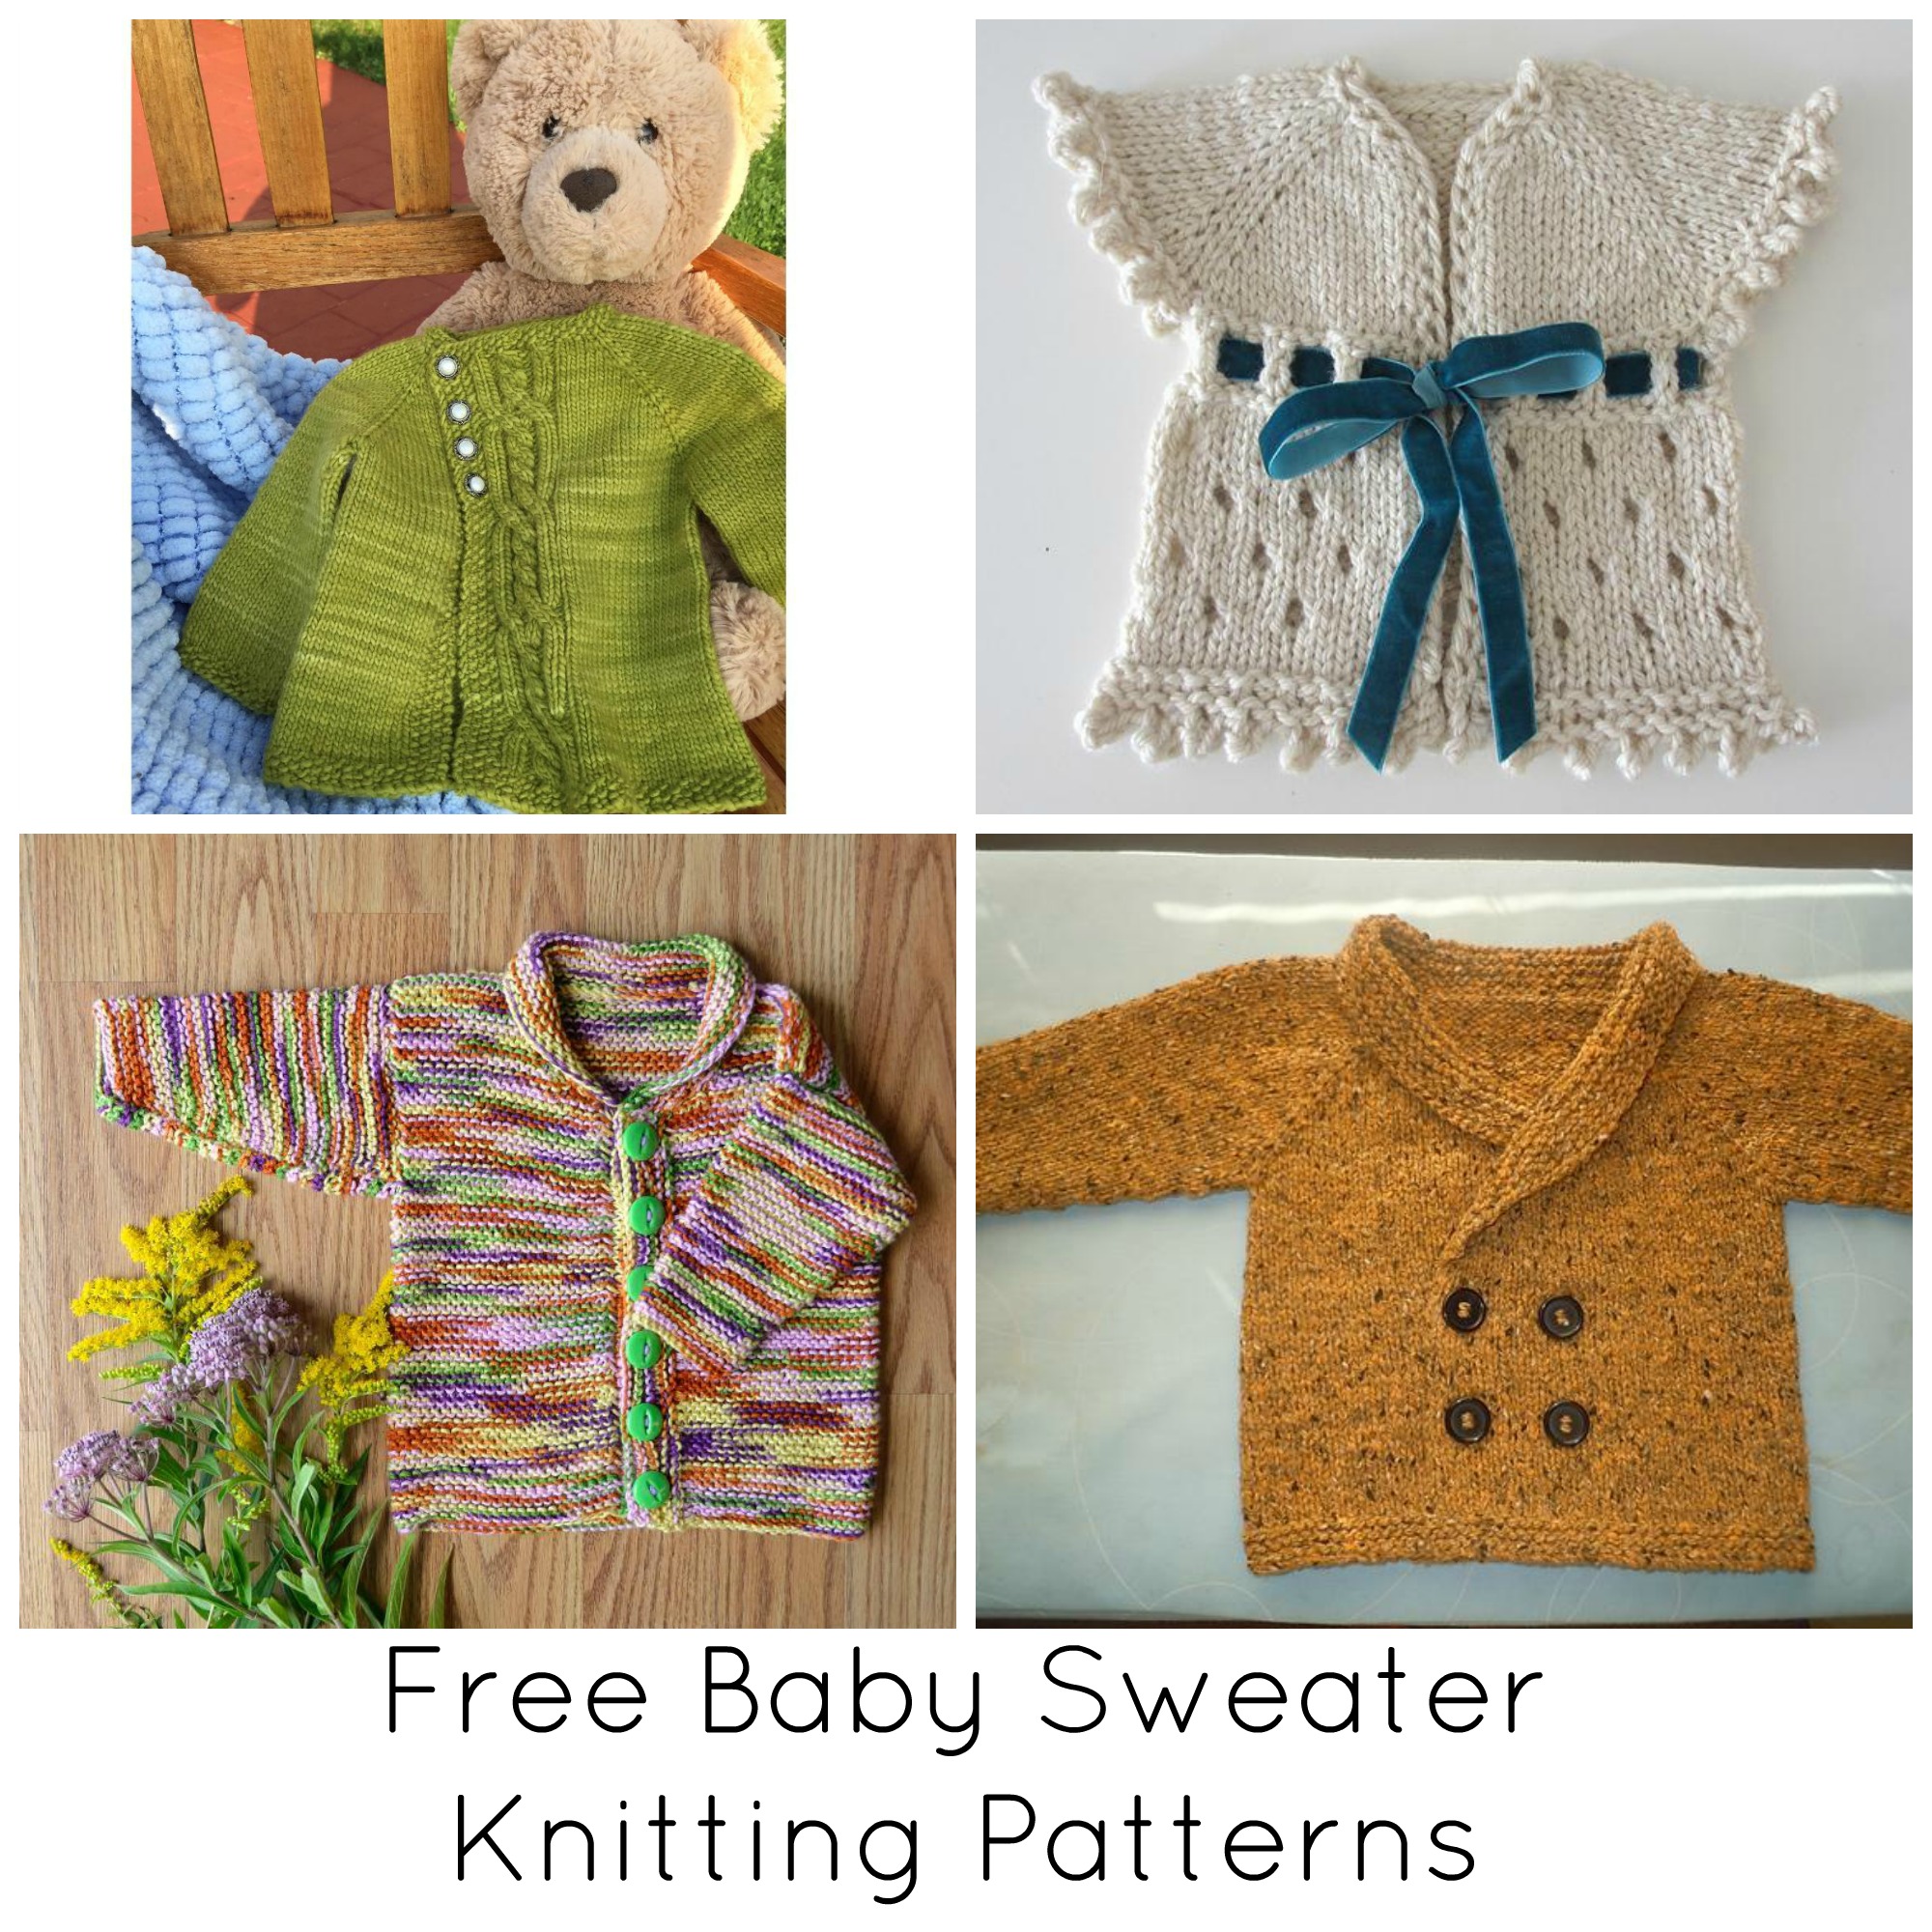 Free Baby Sweater Knitting Patterns